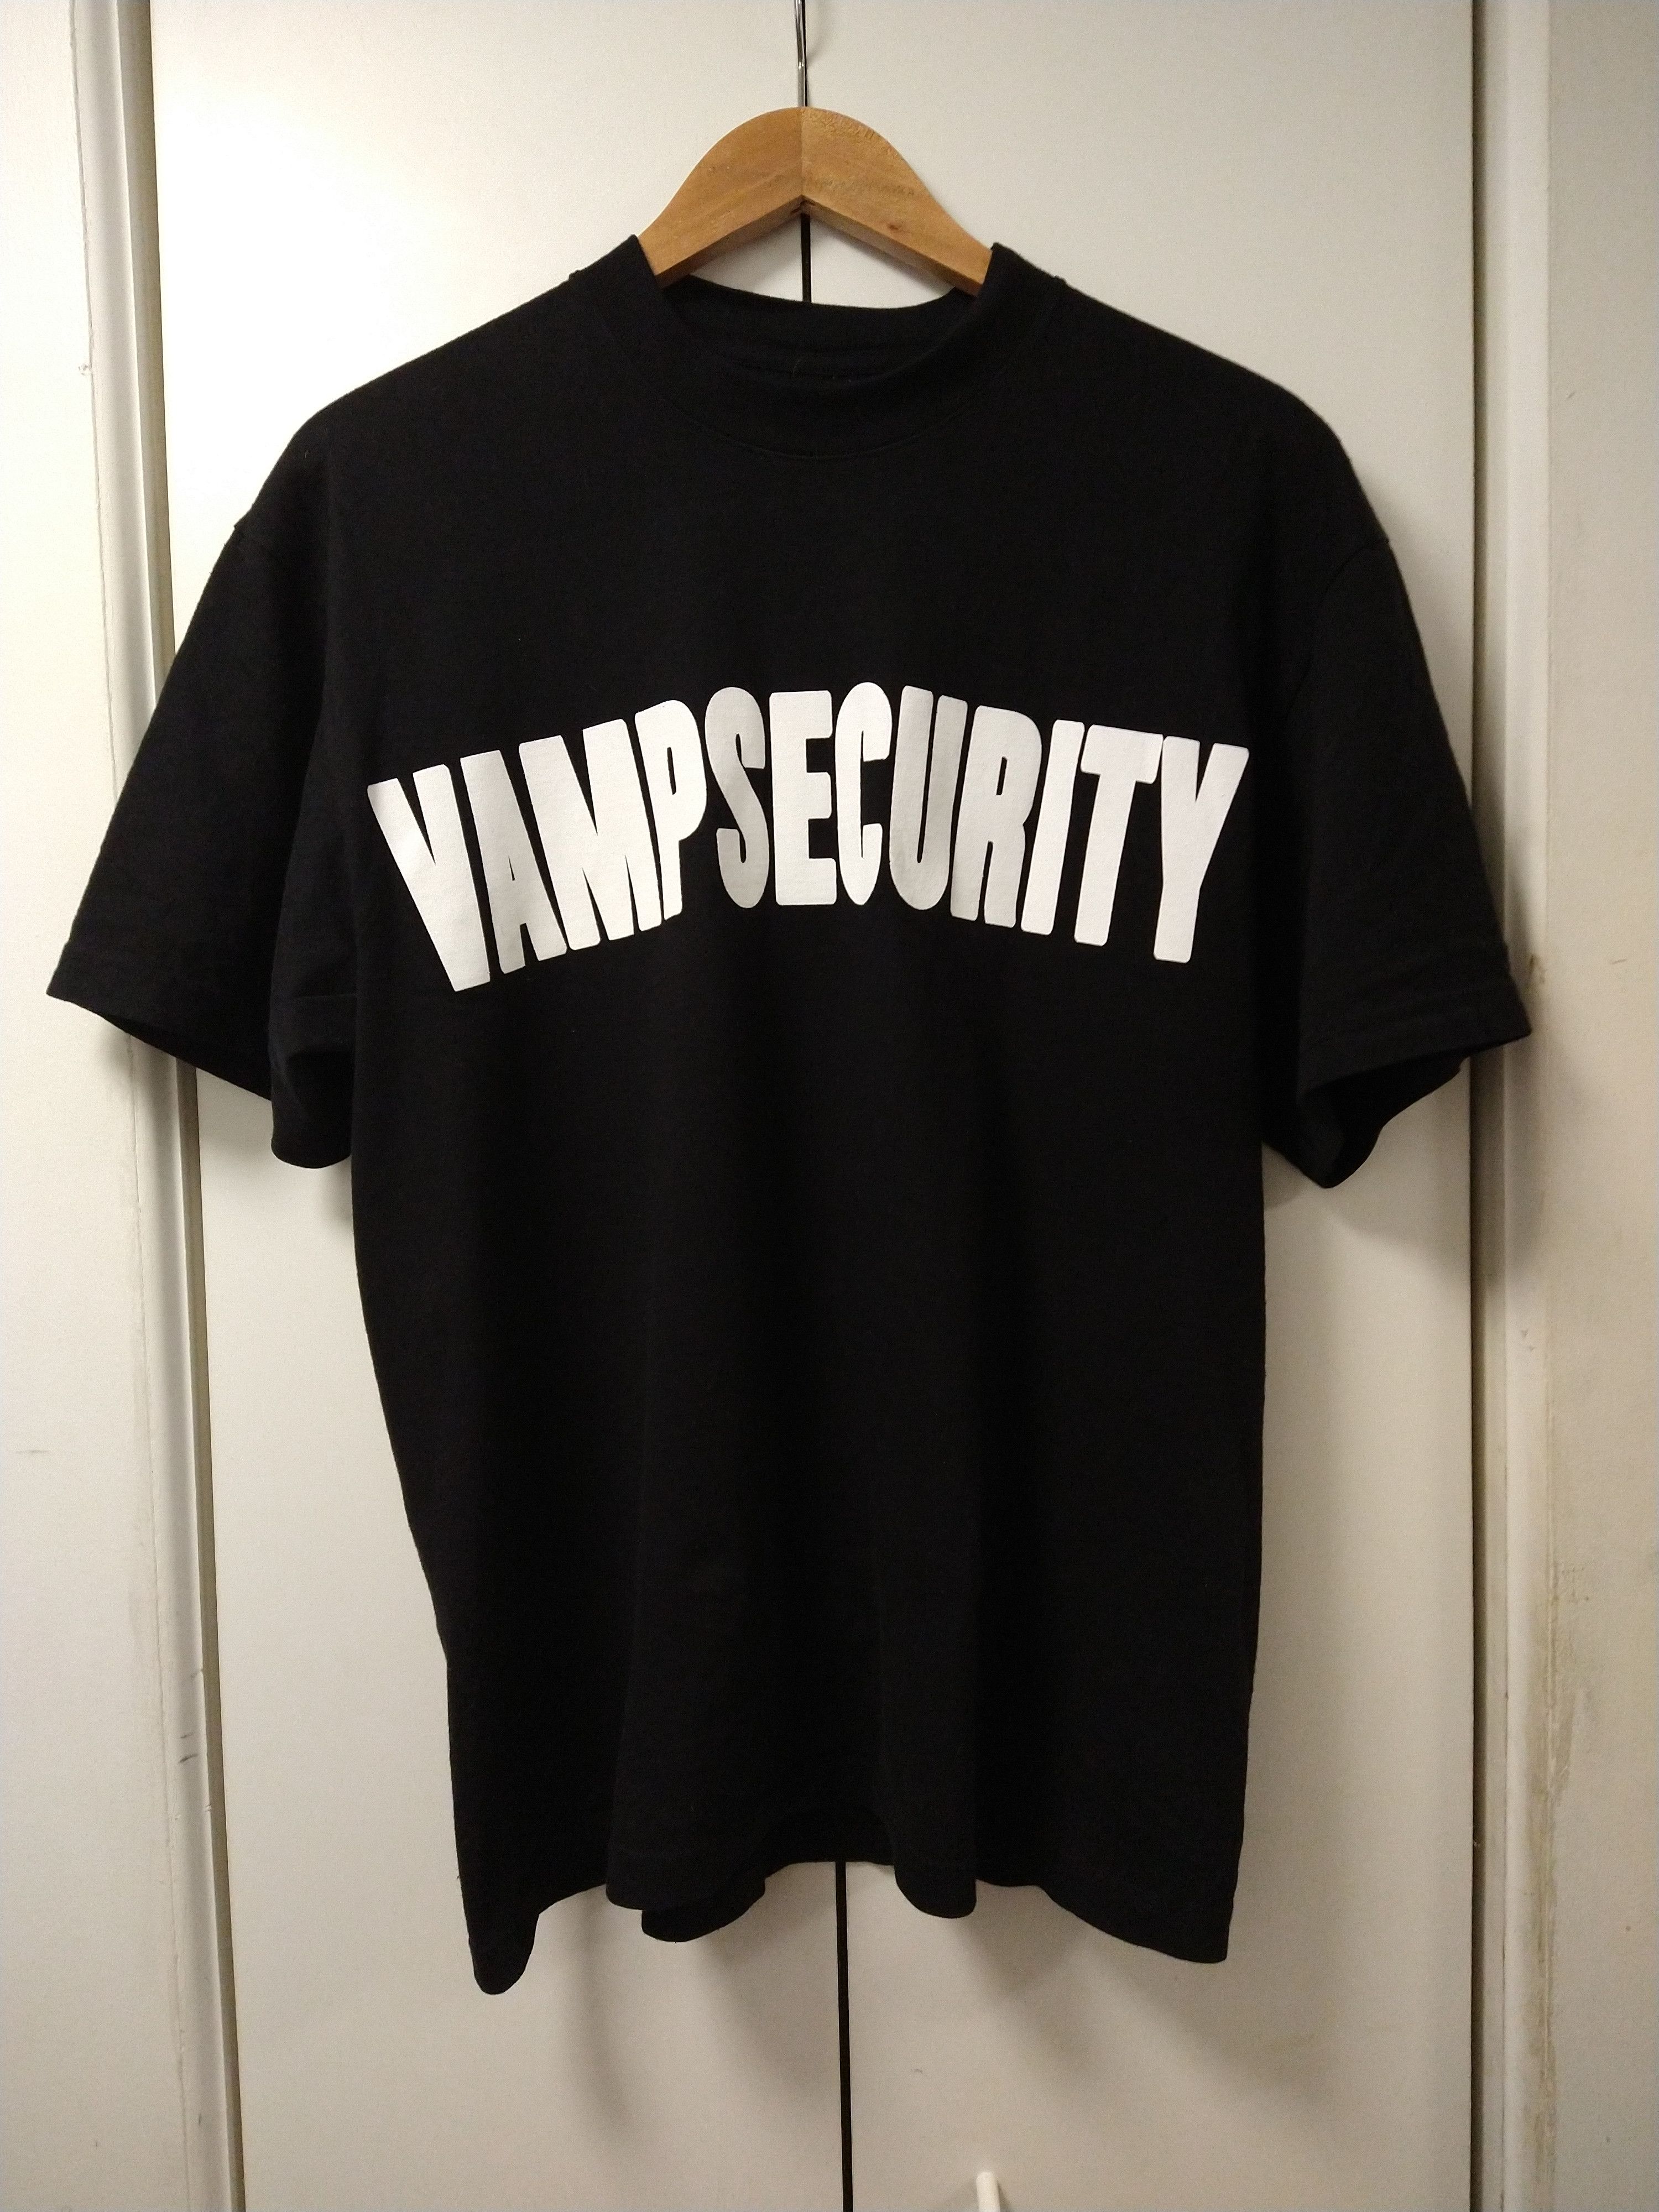 Band Tees Vamp Security Tour Tee | Grailed